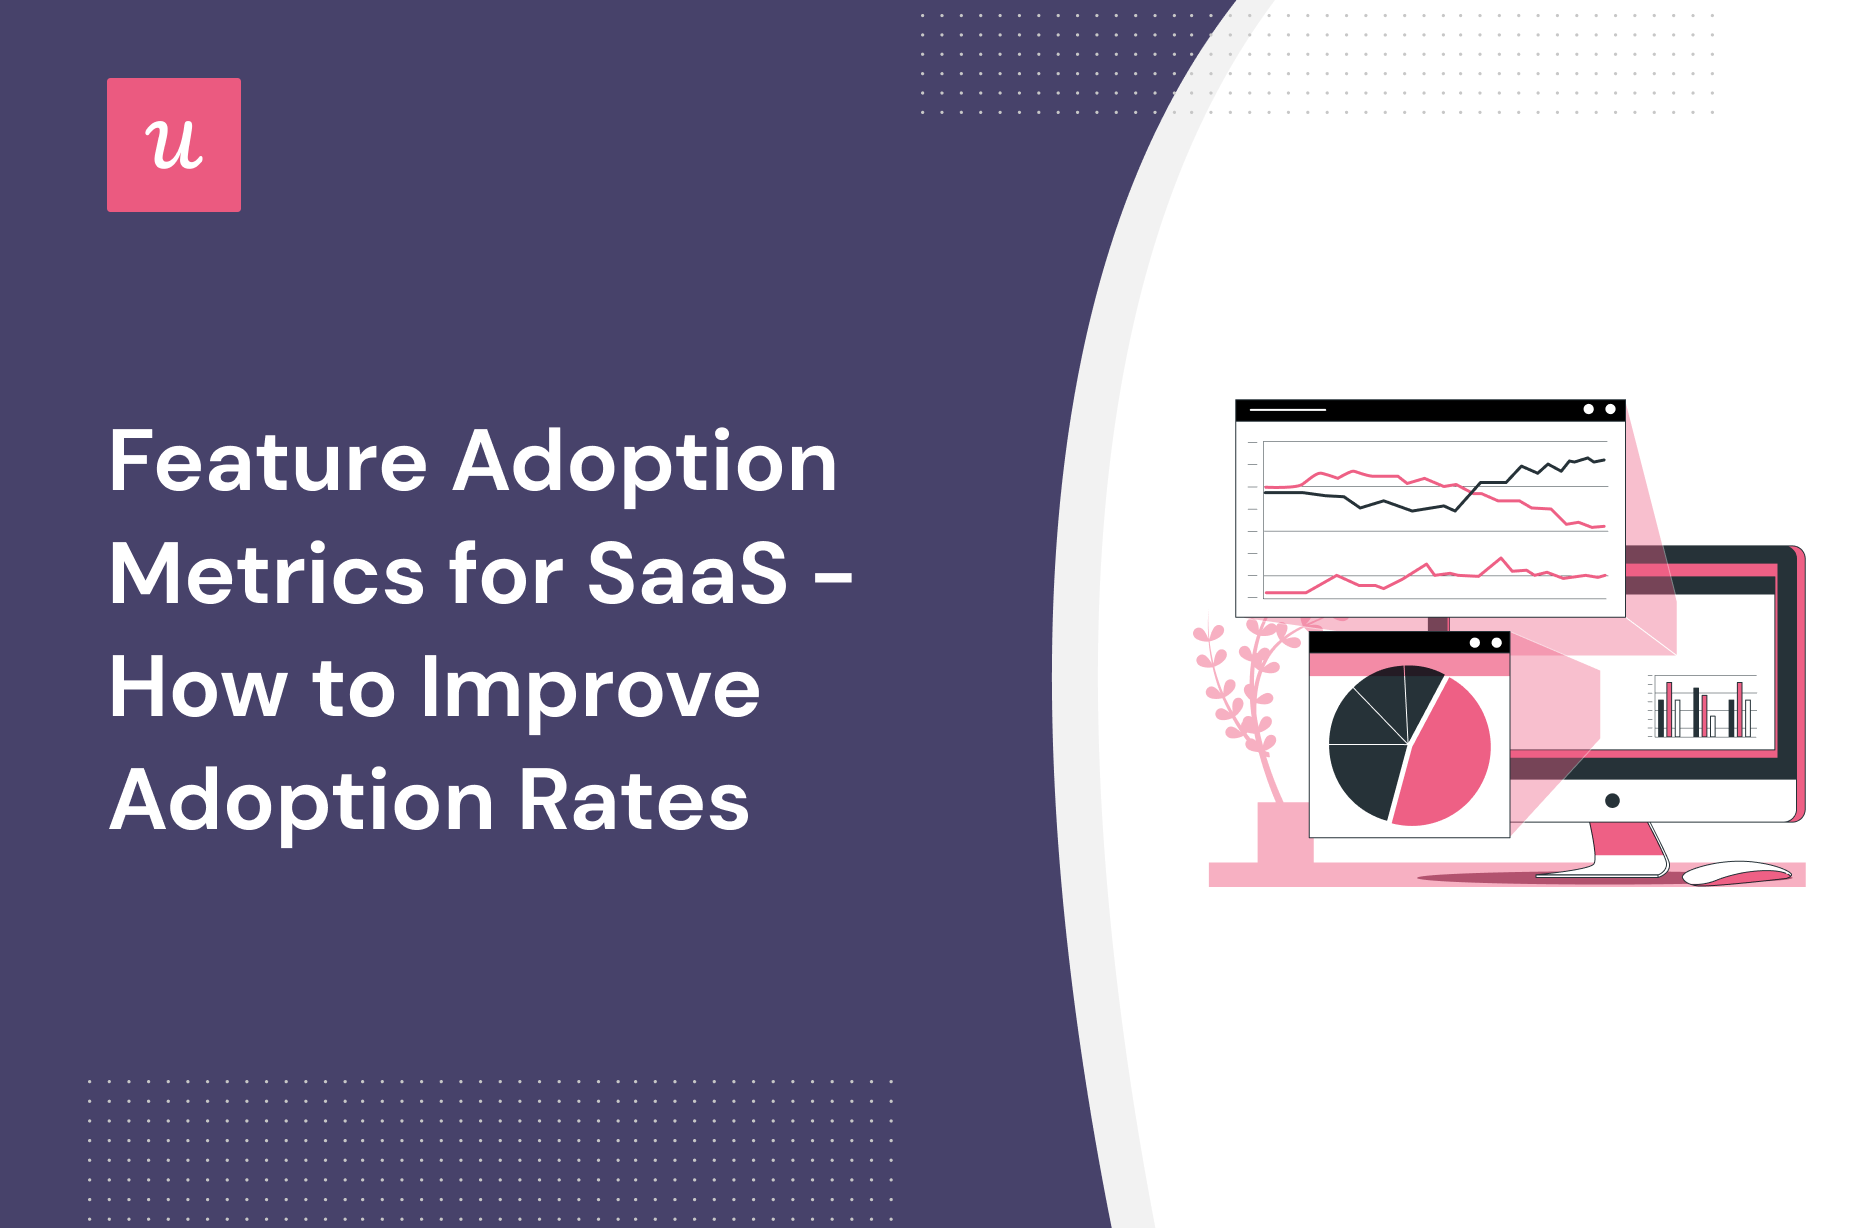 Feature Adoption Metrics for SaaS - How to Improve Adoption Rates